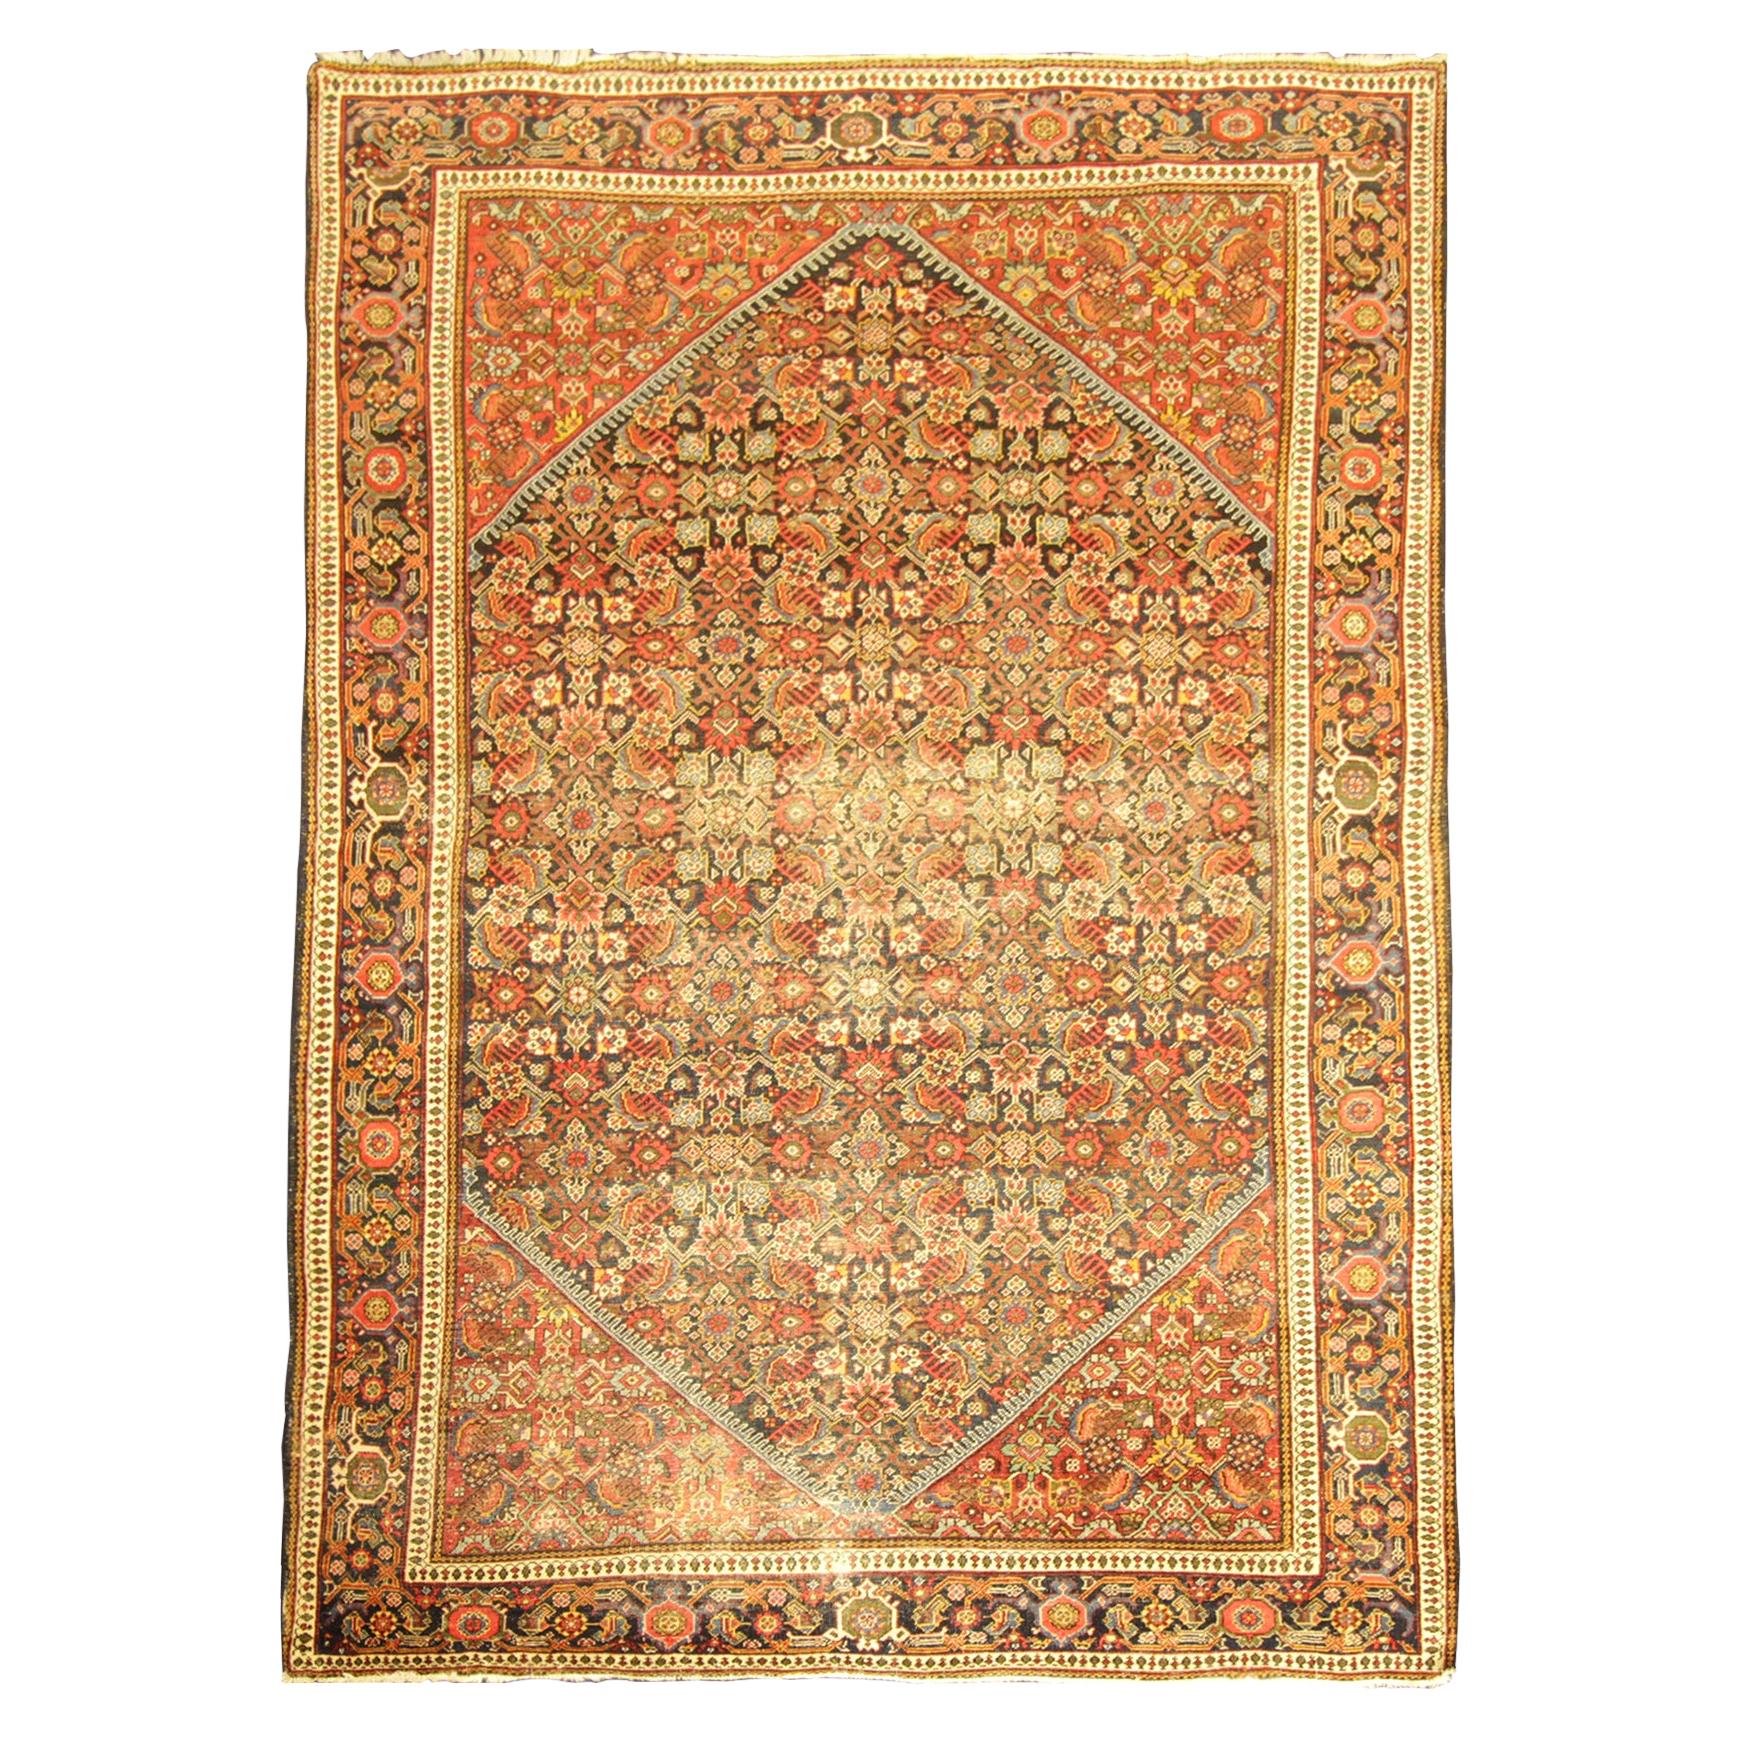 Handmade Oriental Antique Carpet, Orange Wool Area Rug